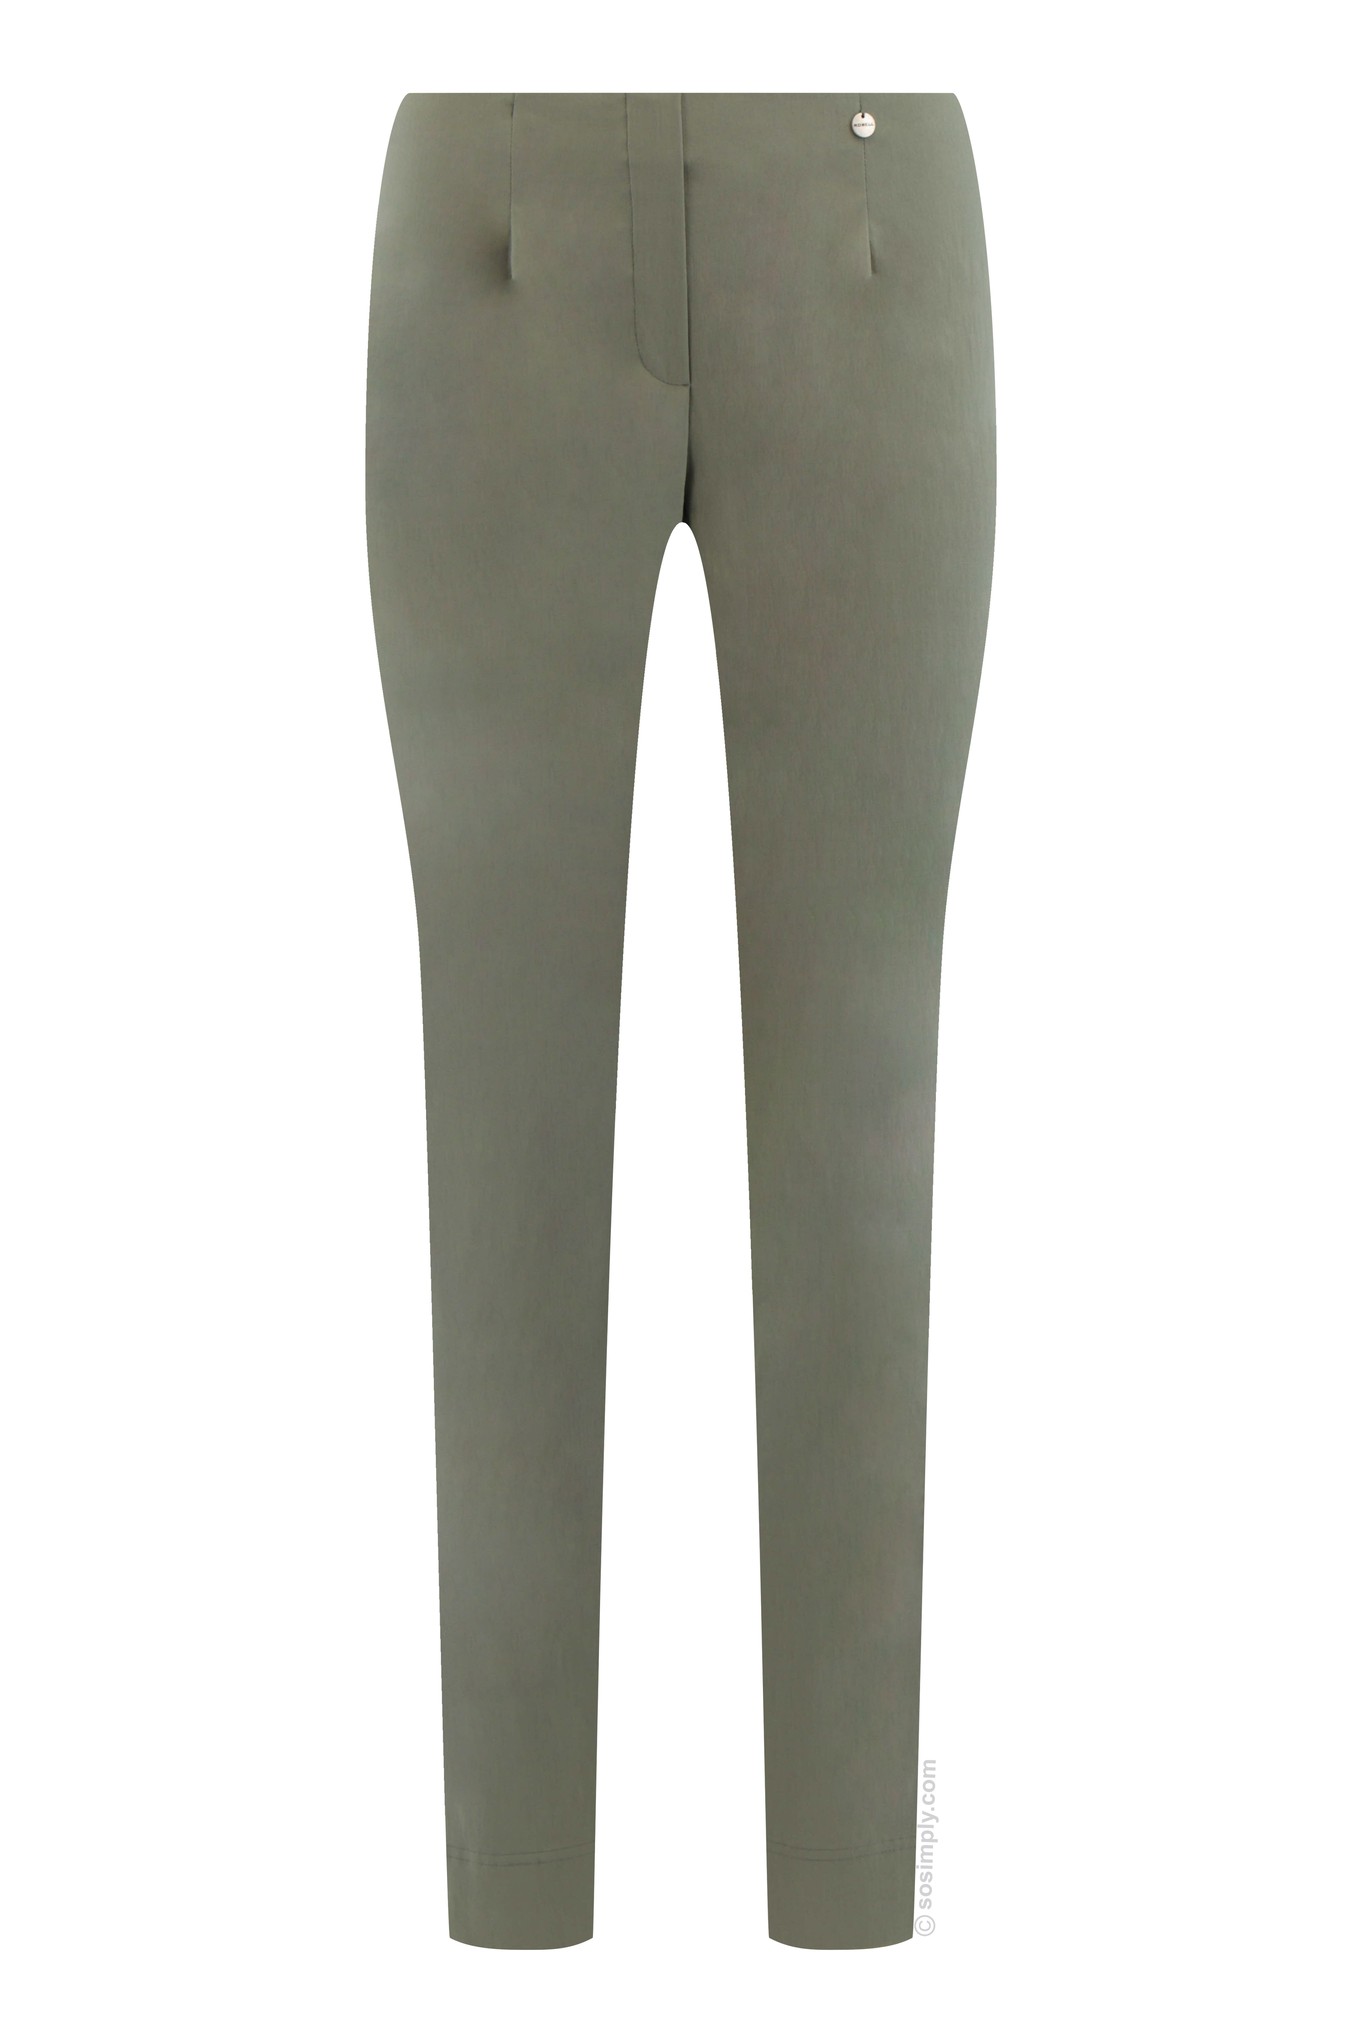 Robell Petite Shorter Length Trousers | So Simply